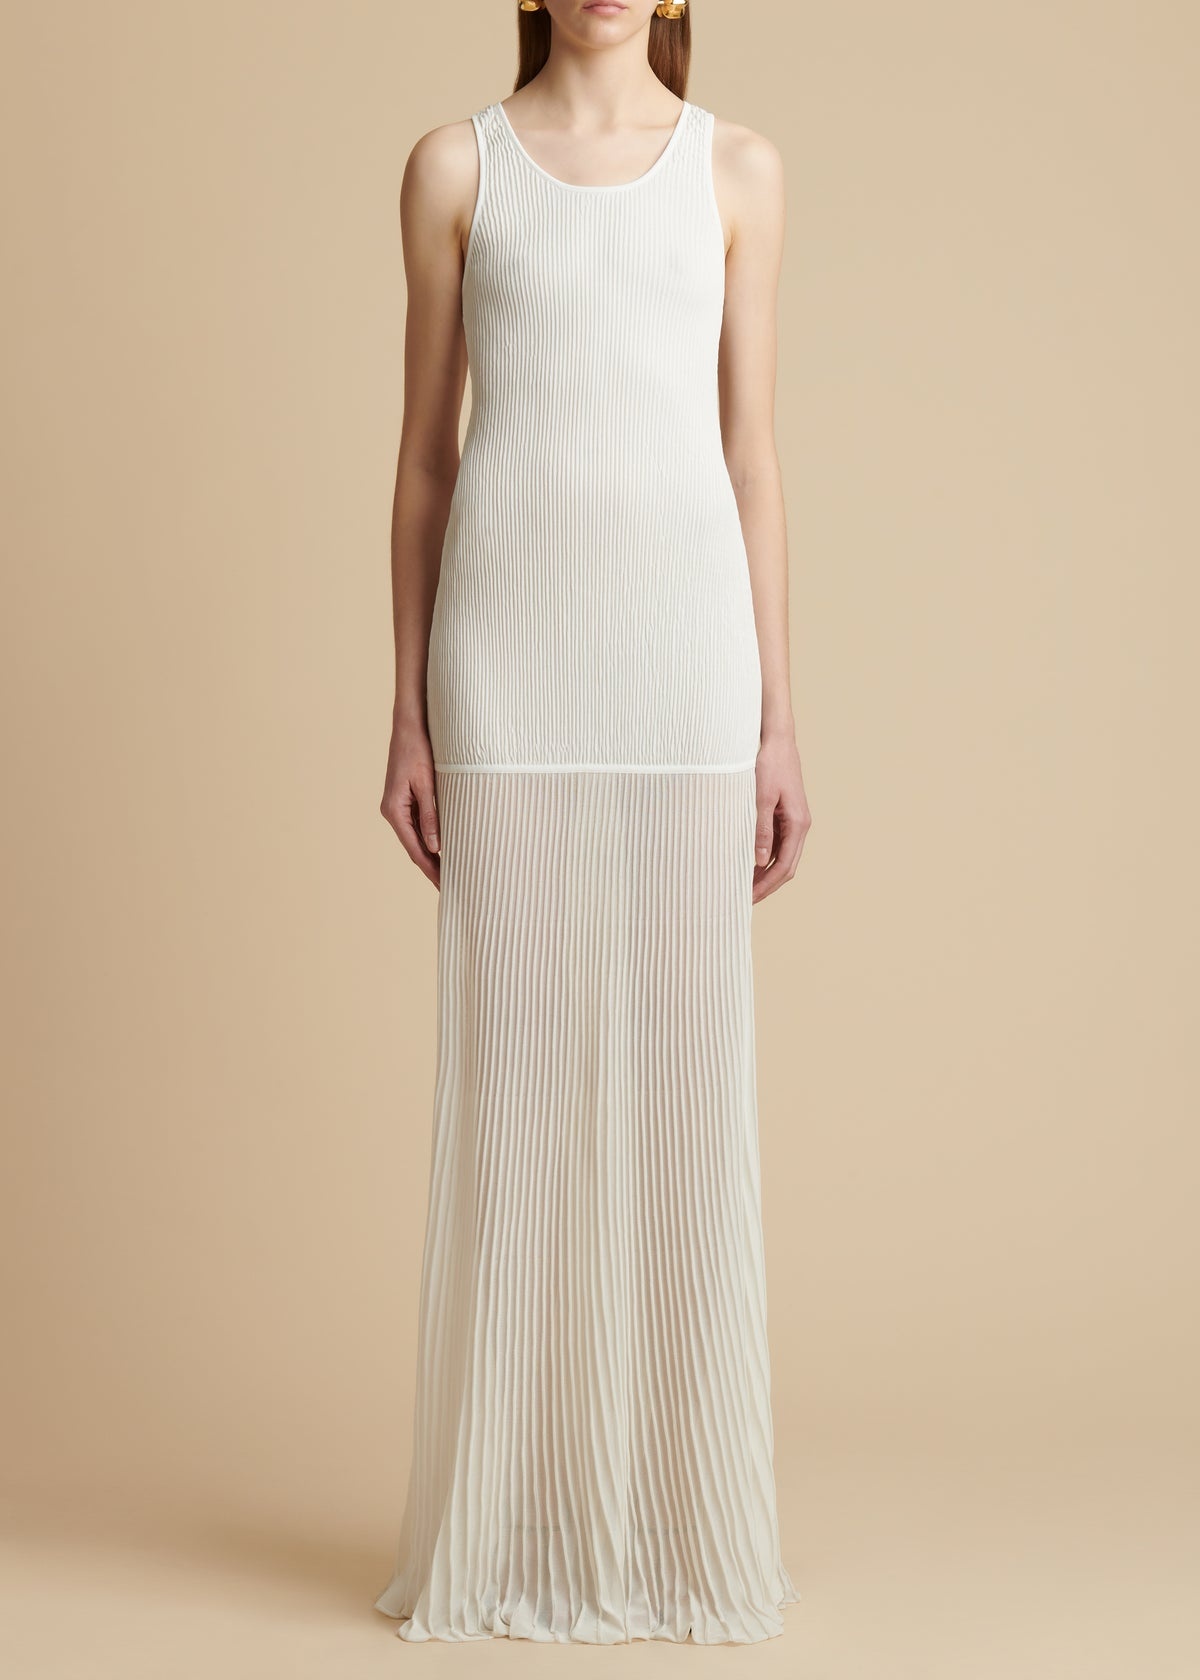 The Nivea Dress in White - 2